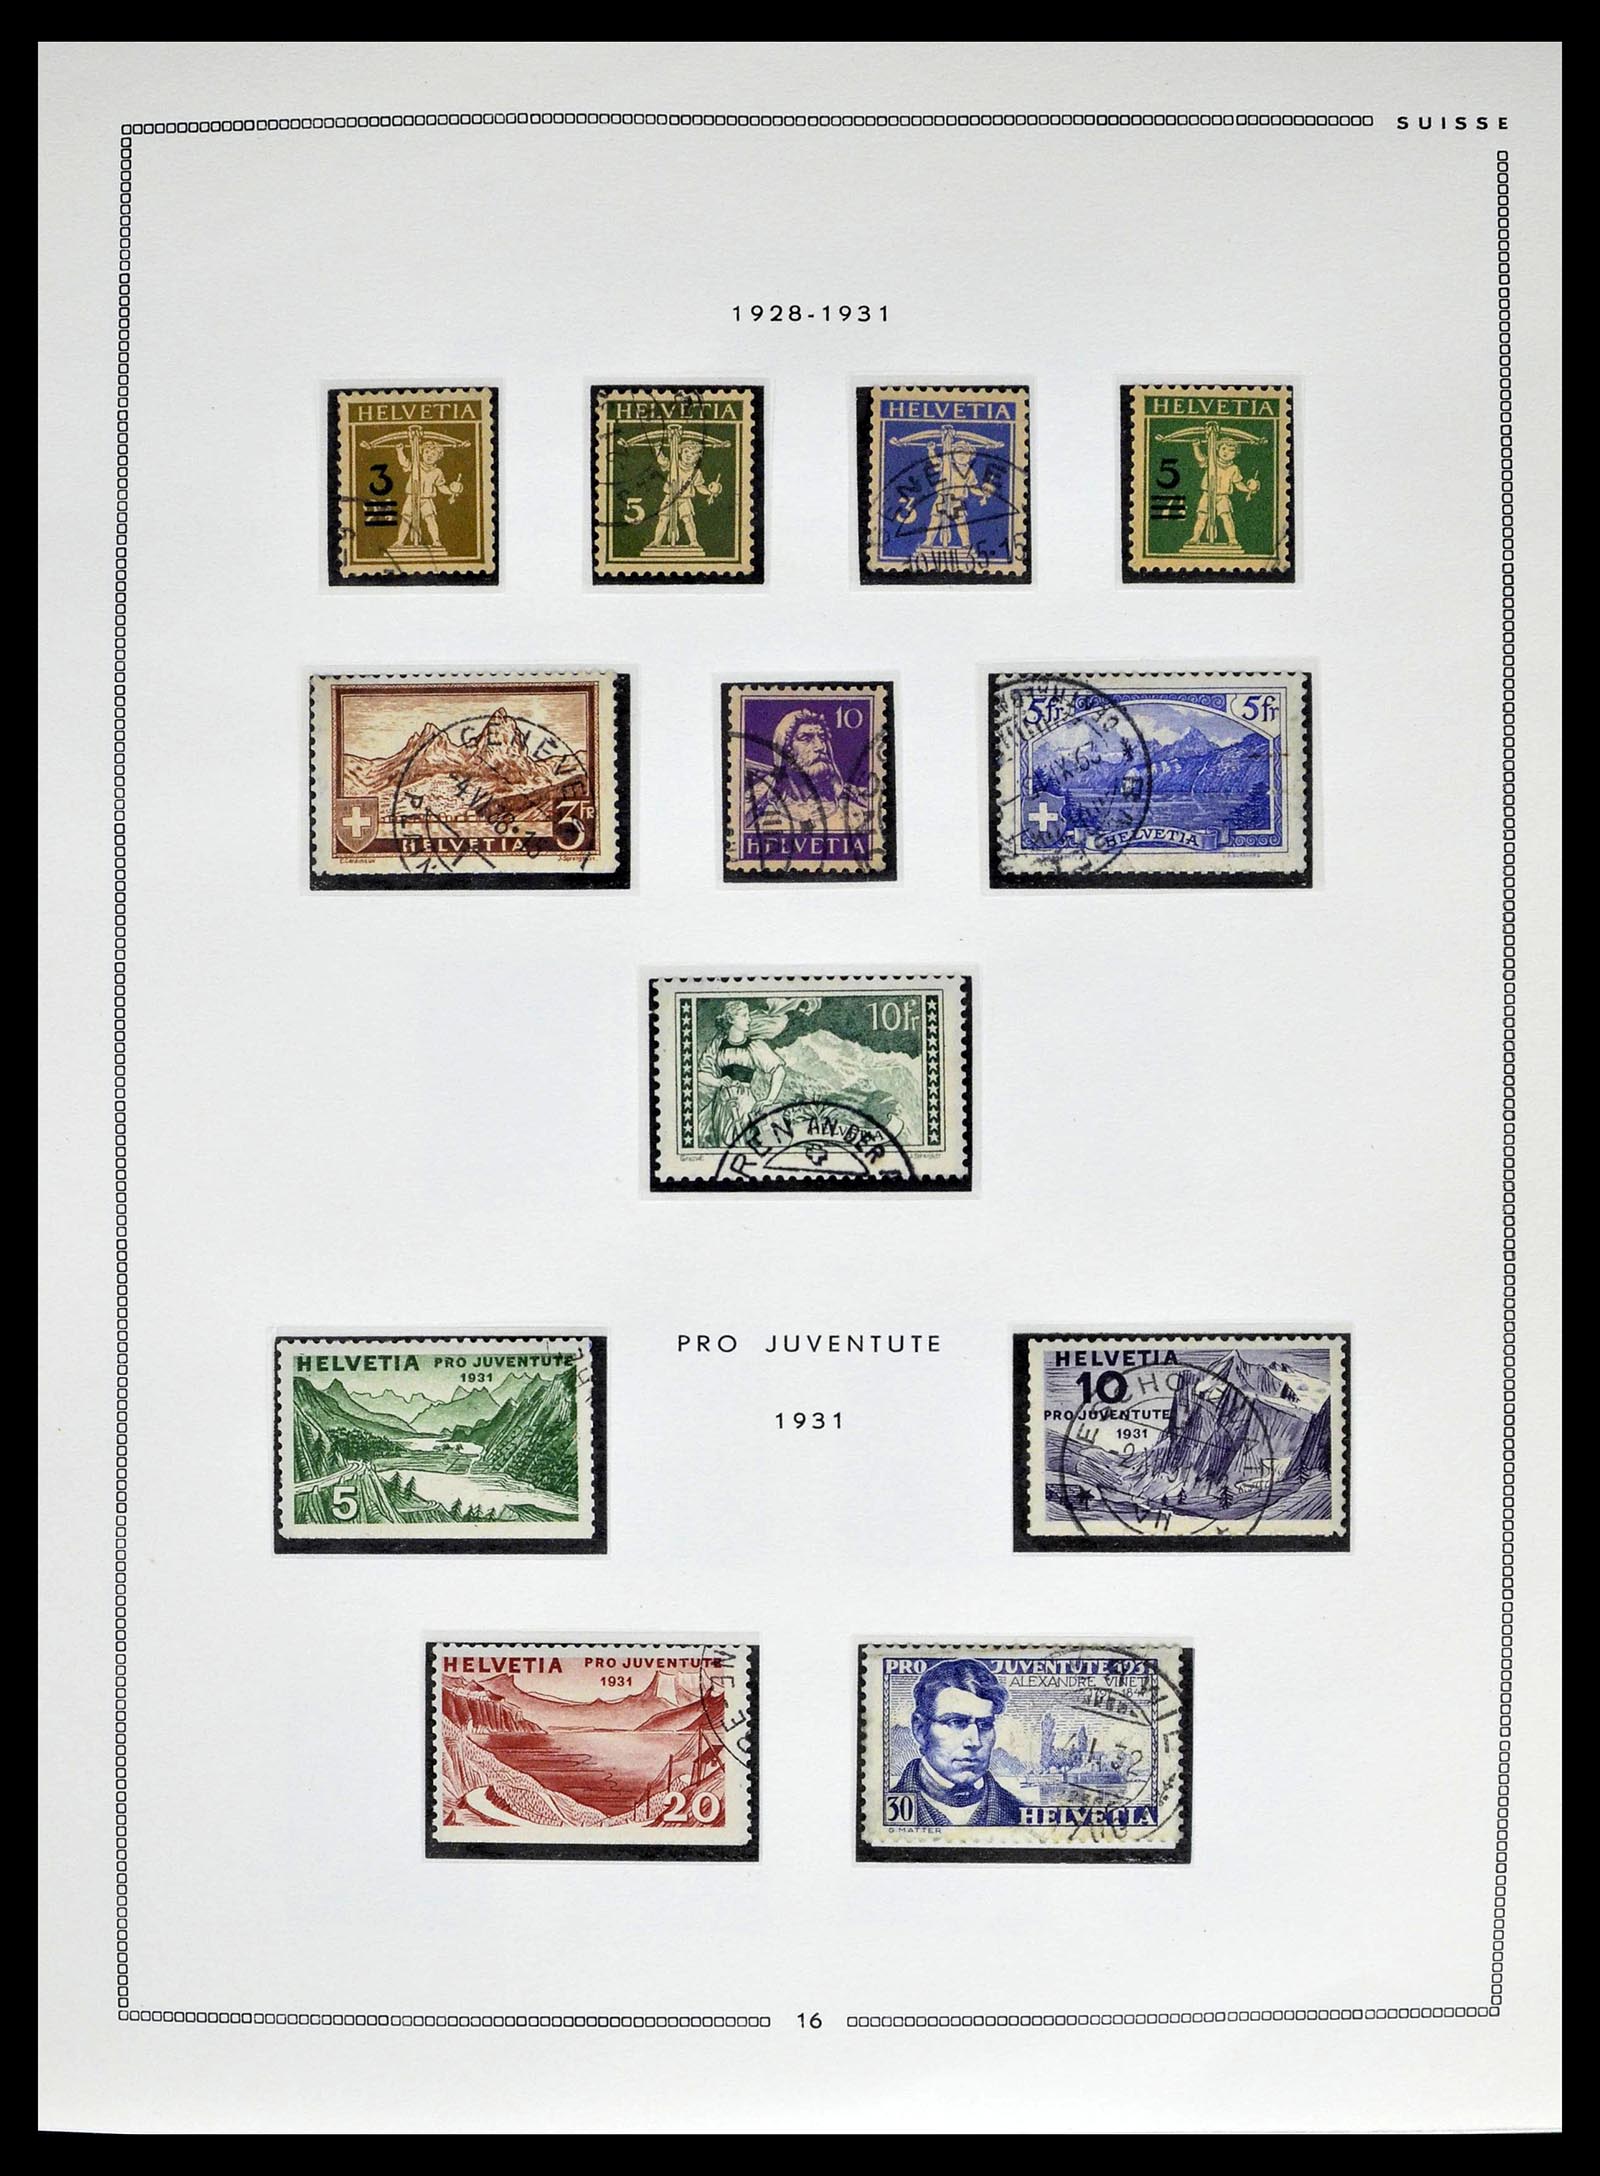 39094 0015 - Stamp collection 39094 Switzerland 1850-2005.